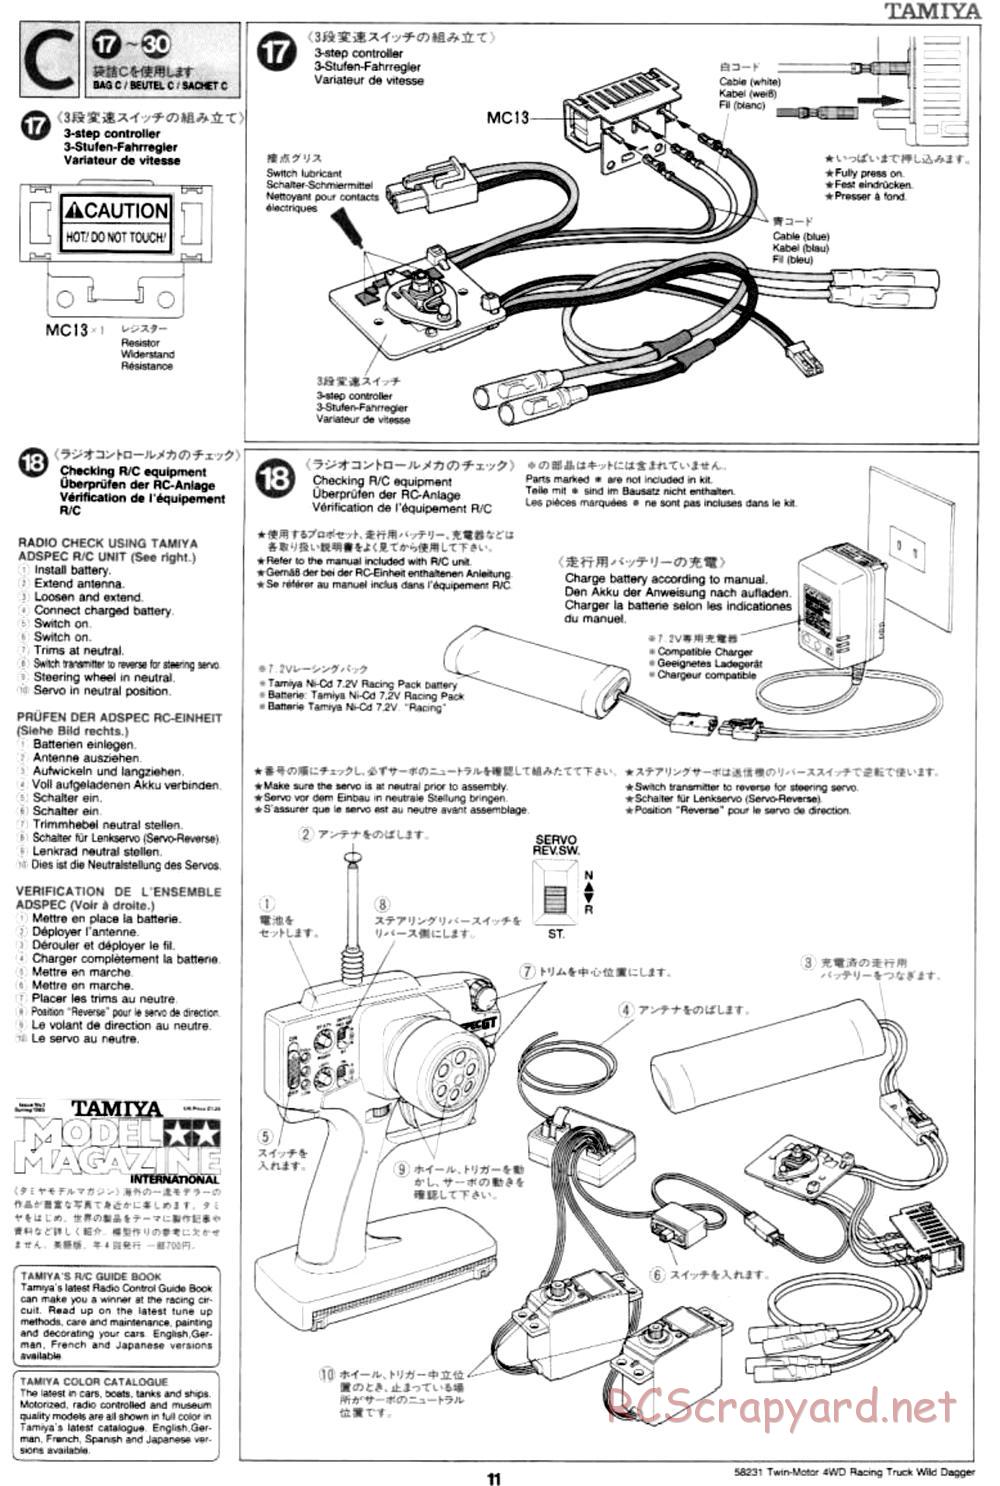 Tamiya - Wild Dagger - WR-01 Chassis - Manual - Page 11